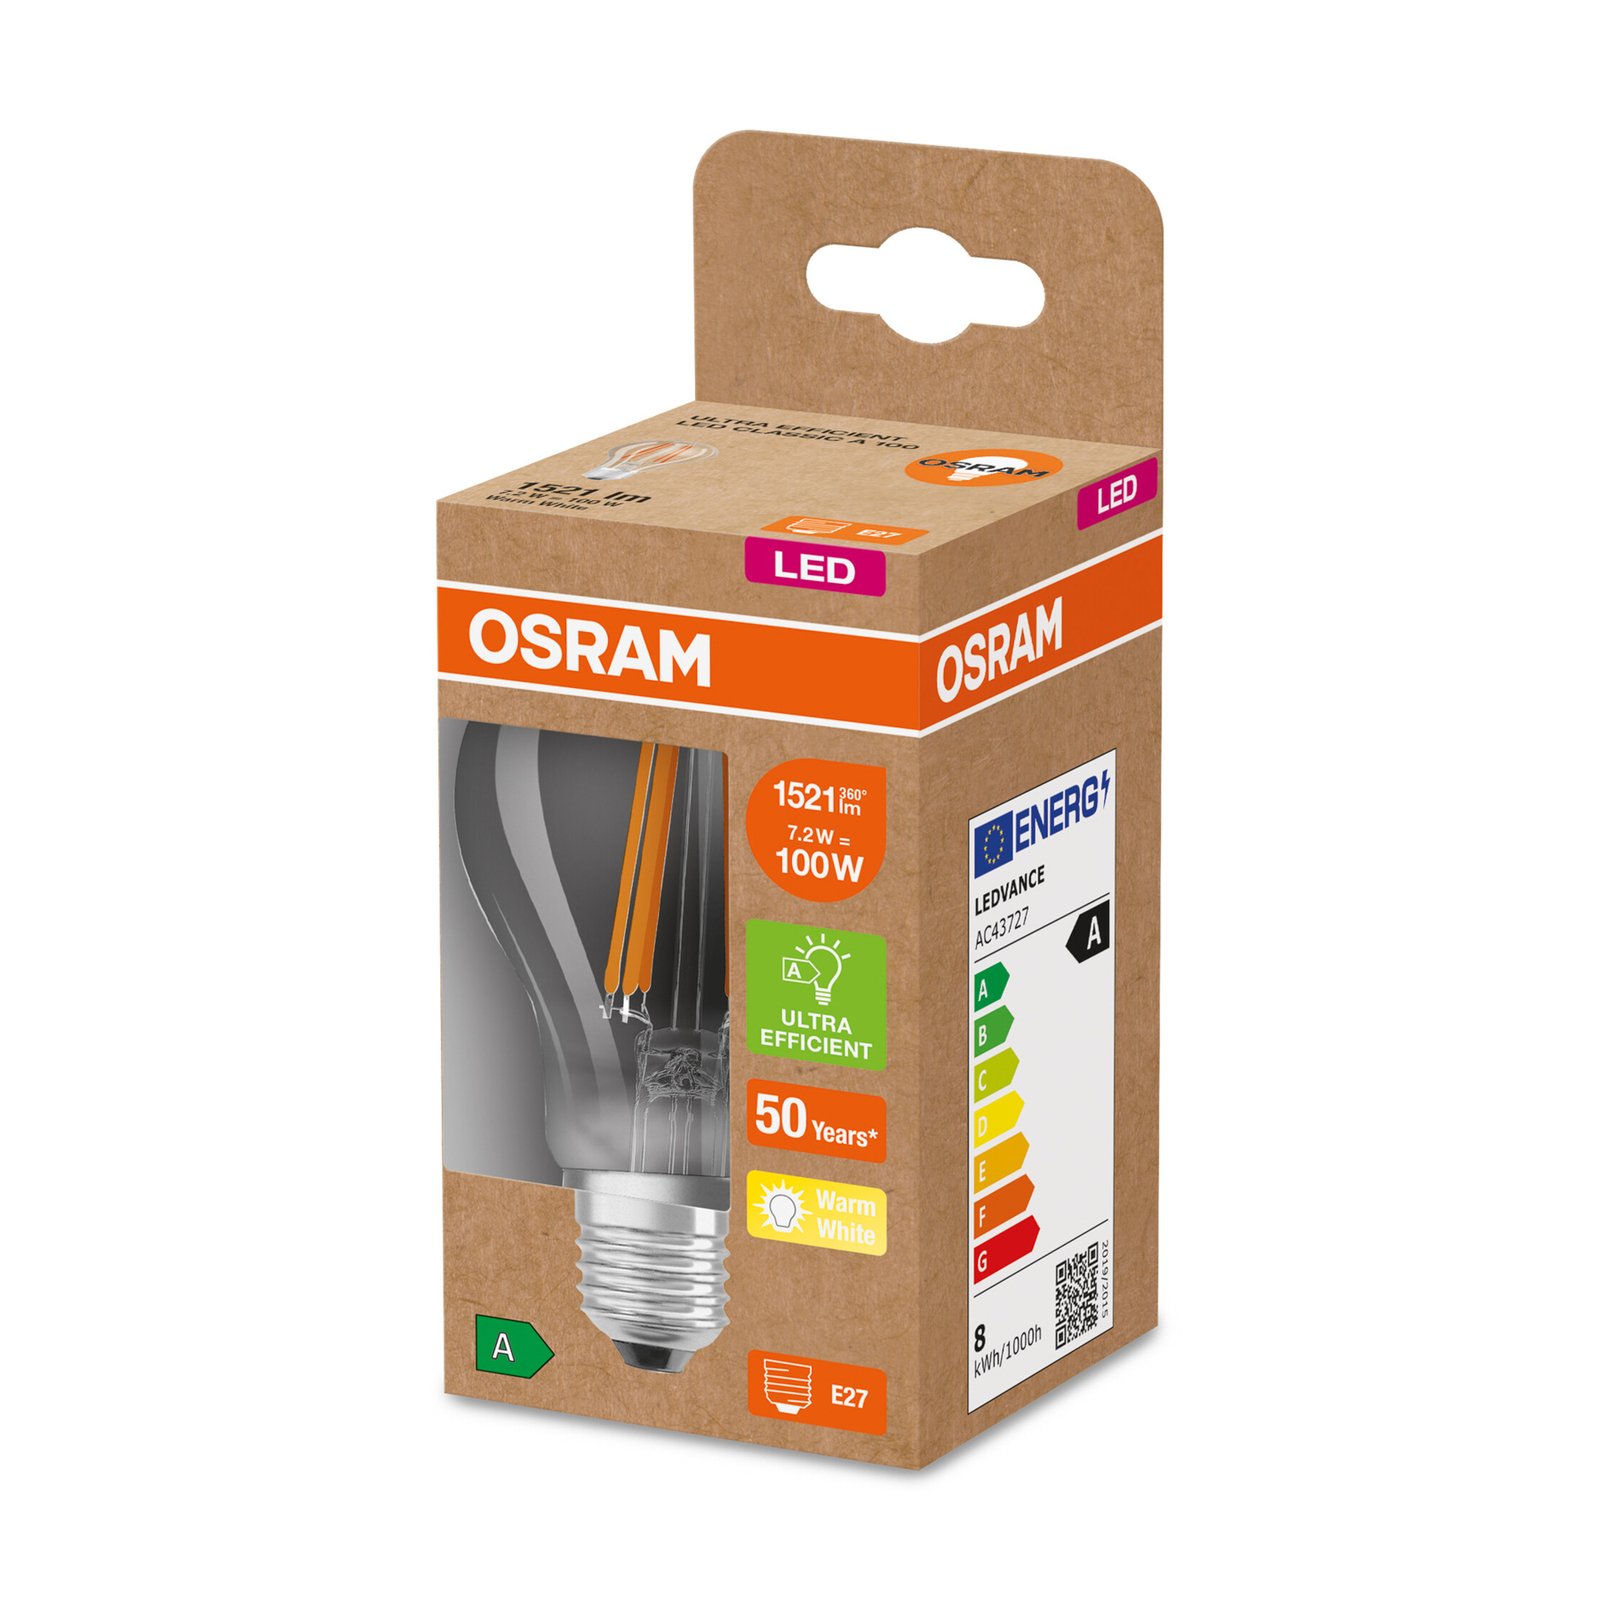 OSRAM LED-Lampe E27 A60 7,2W 1.521lm 3.000K klar